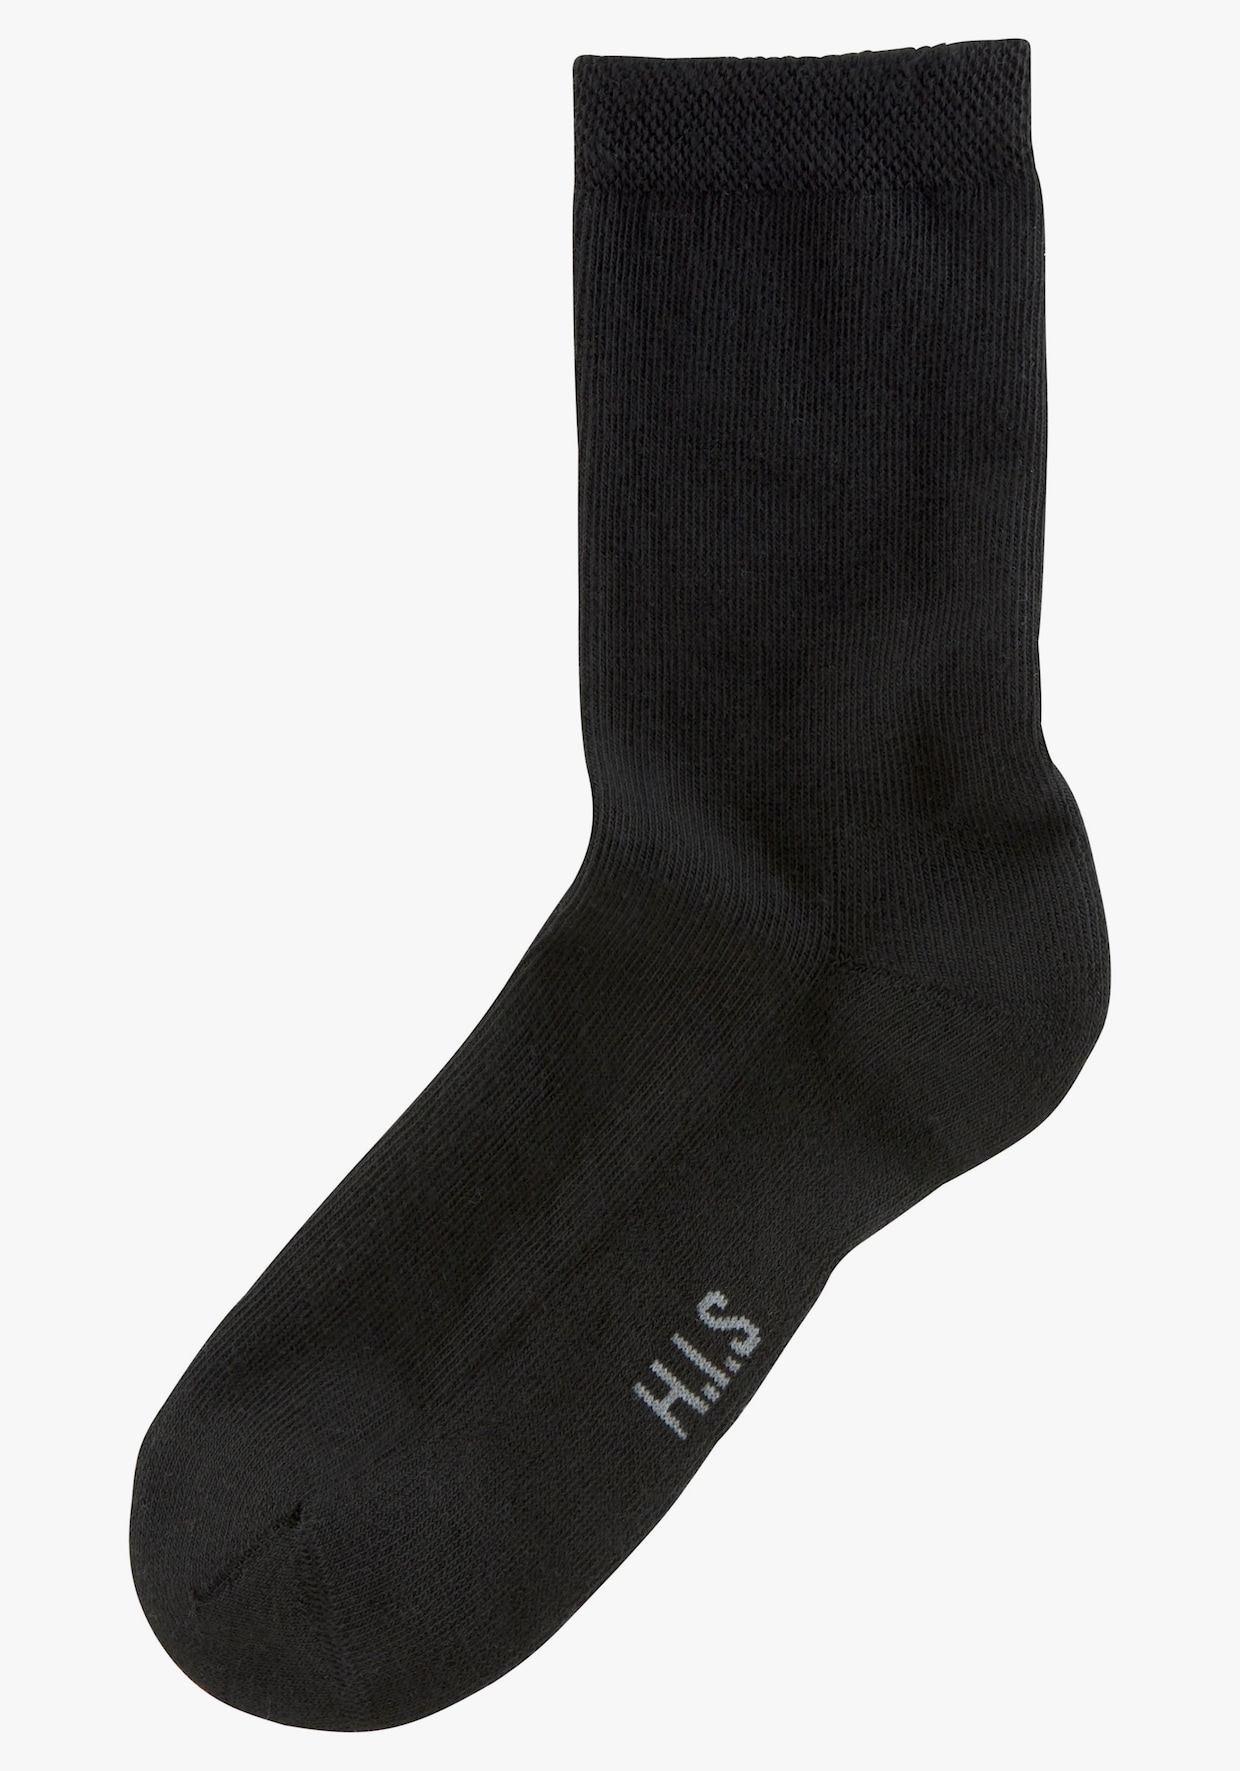 H.I.S Sokken - 2x zwart, 2x jeans gemêleerd, 2x grijs gemêleerd